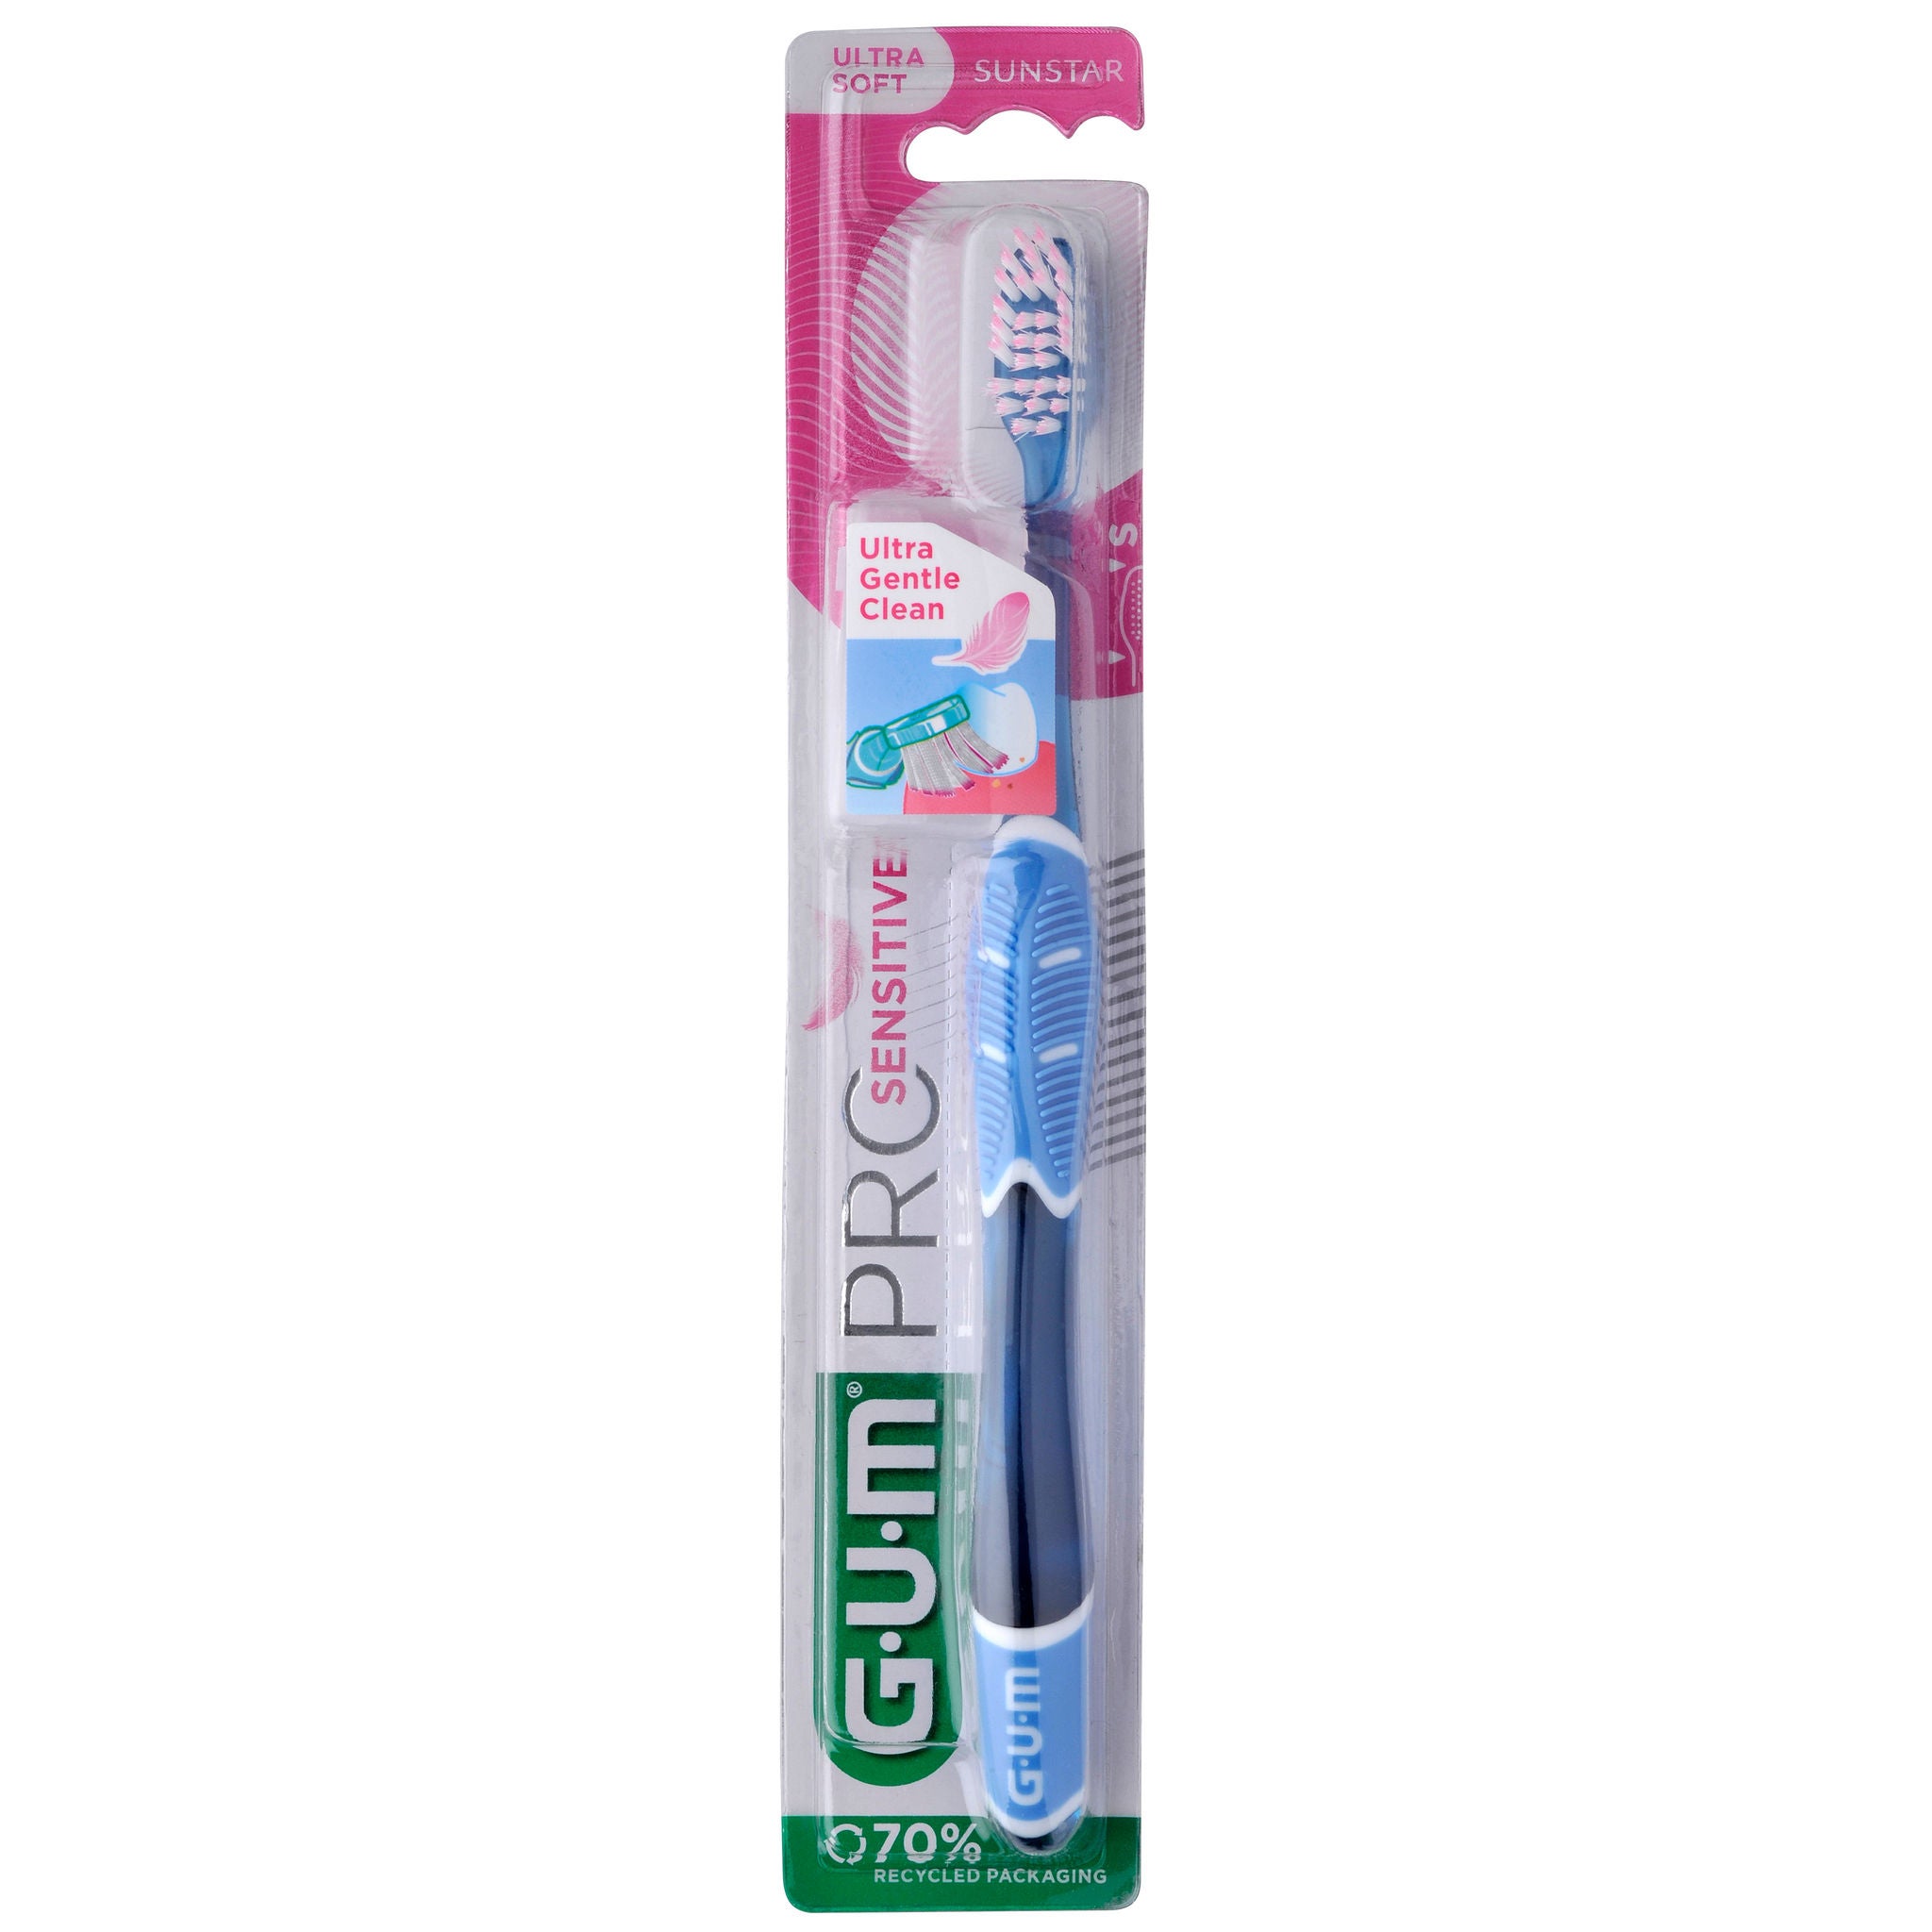 GUM® PRO SENSITIVE Toothbrush